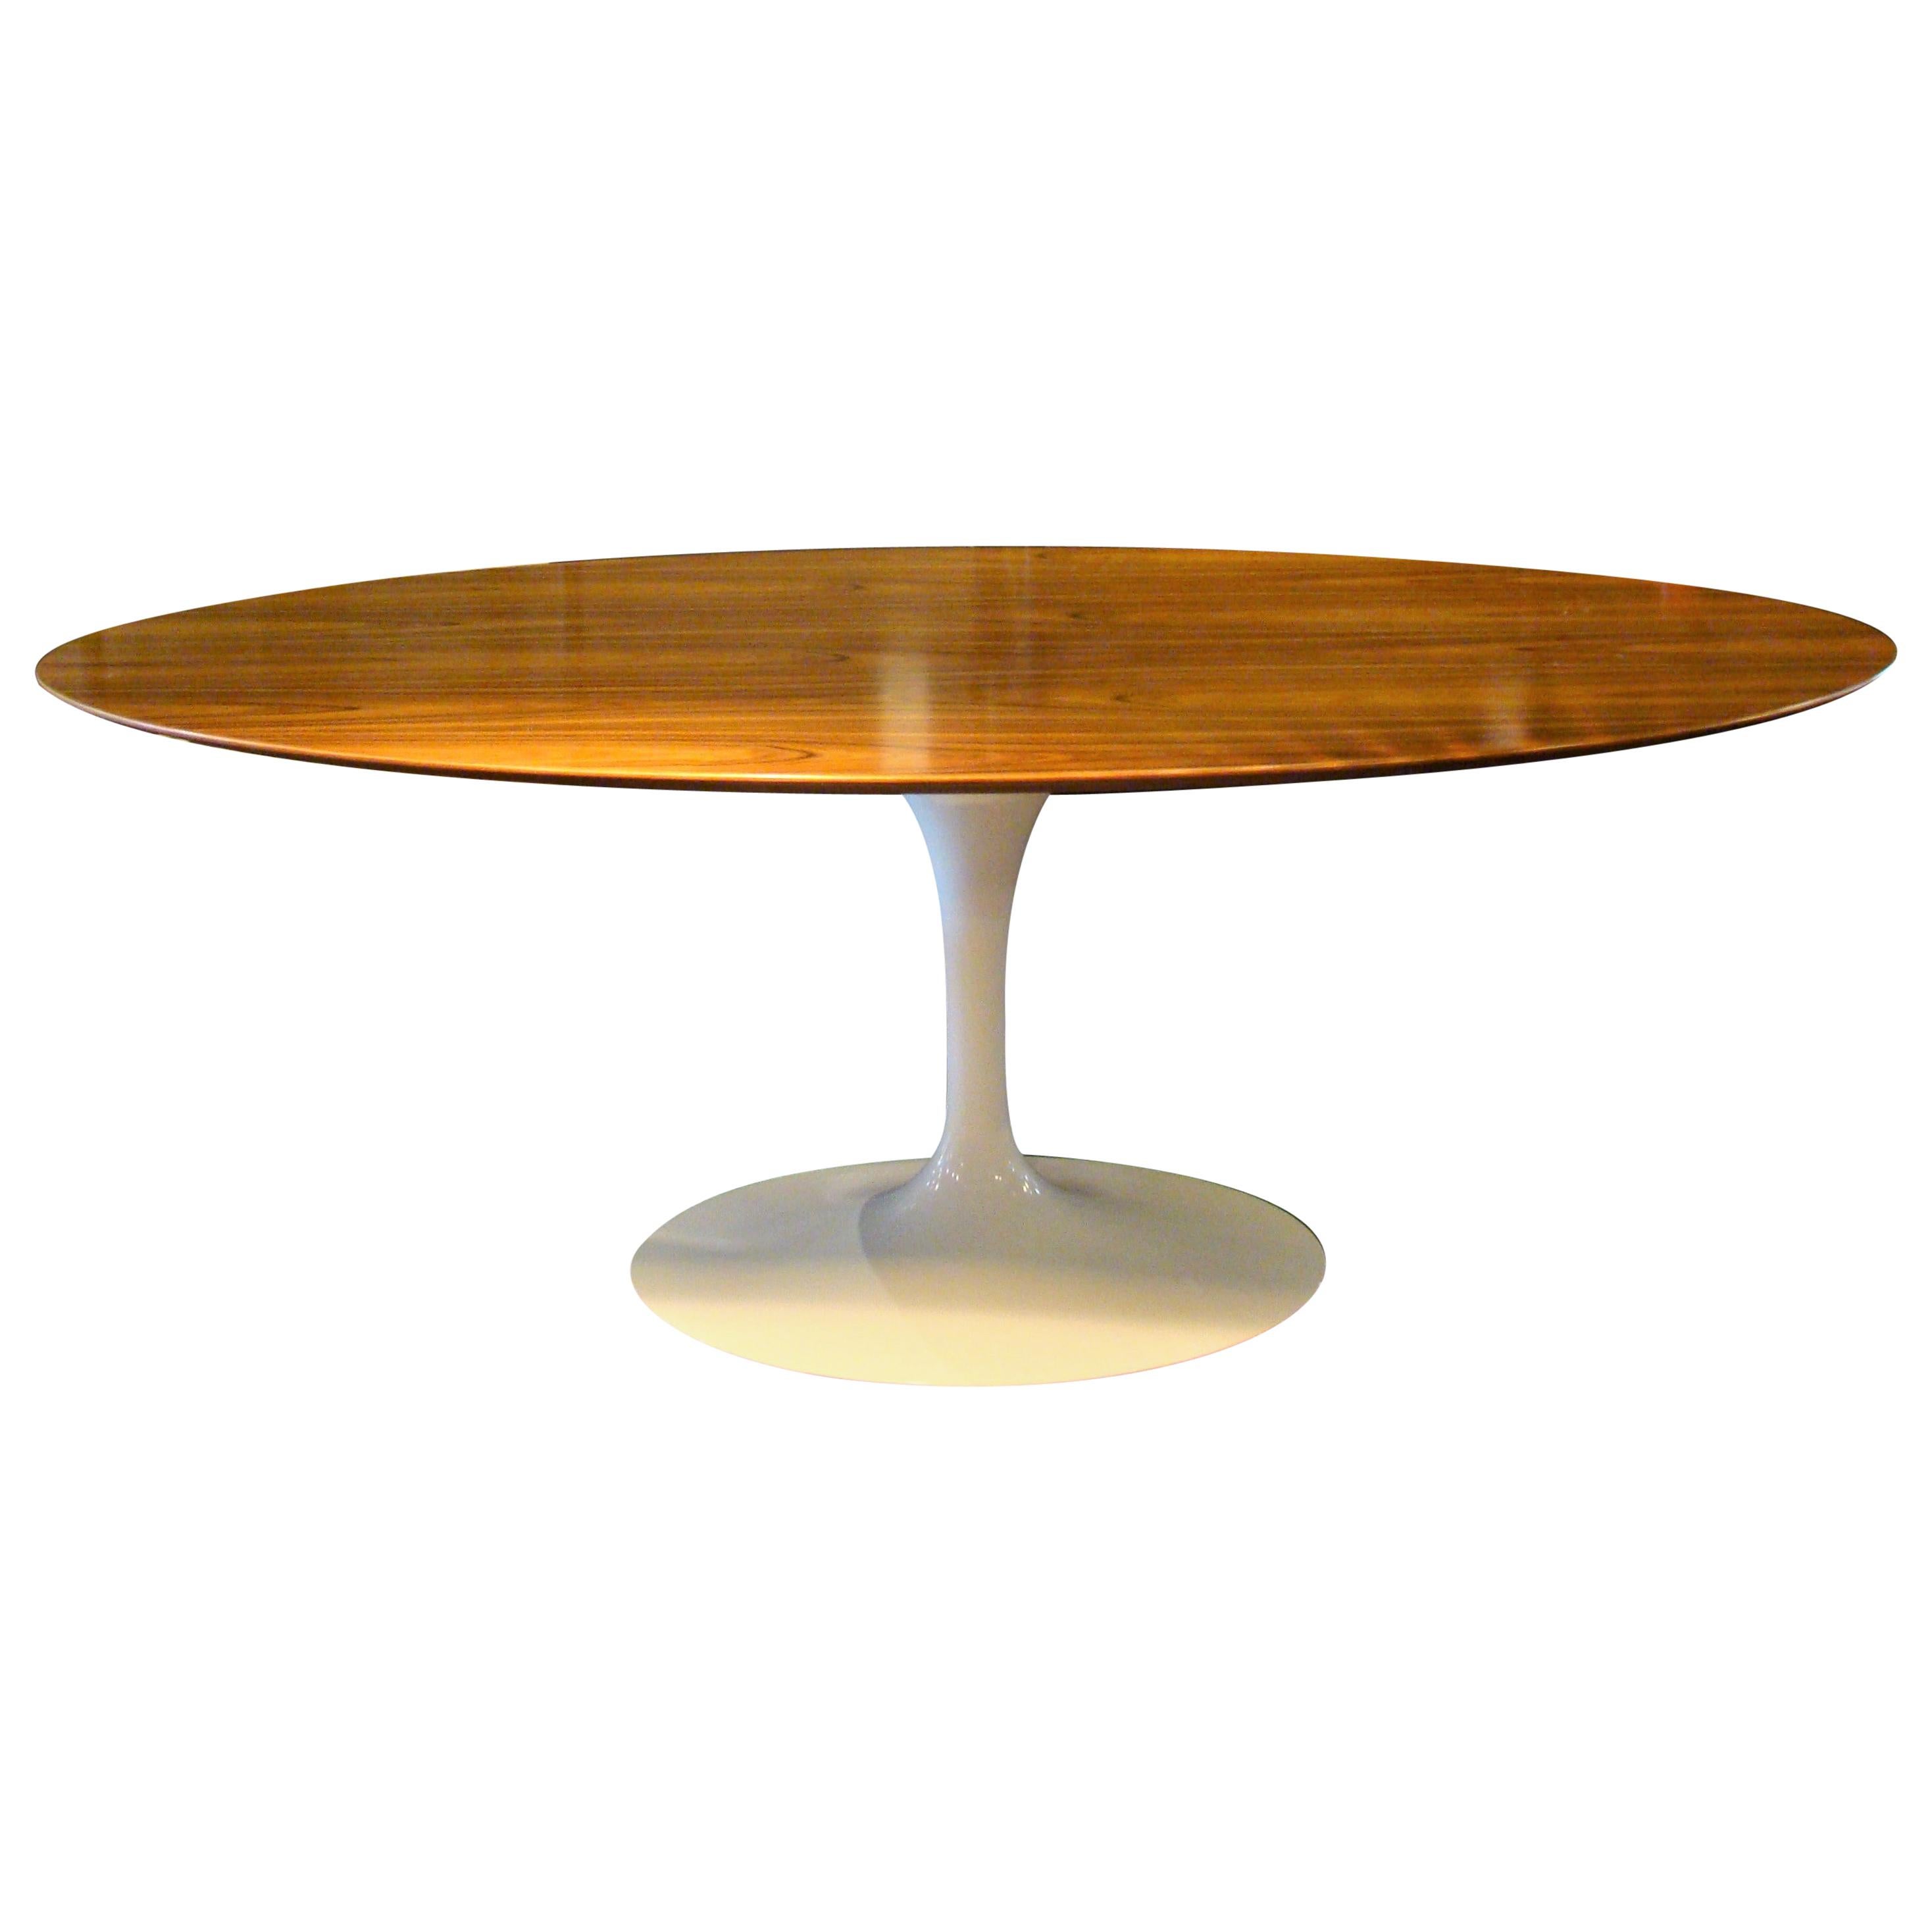 Oval Saarinen Tulip Pedestal Table in Quarter Sawn Teak for Knoll International